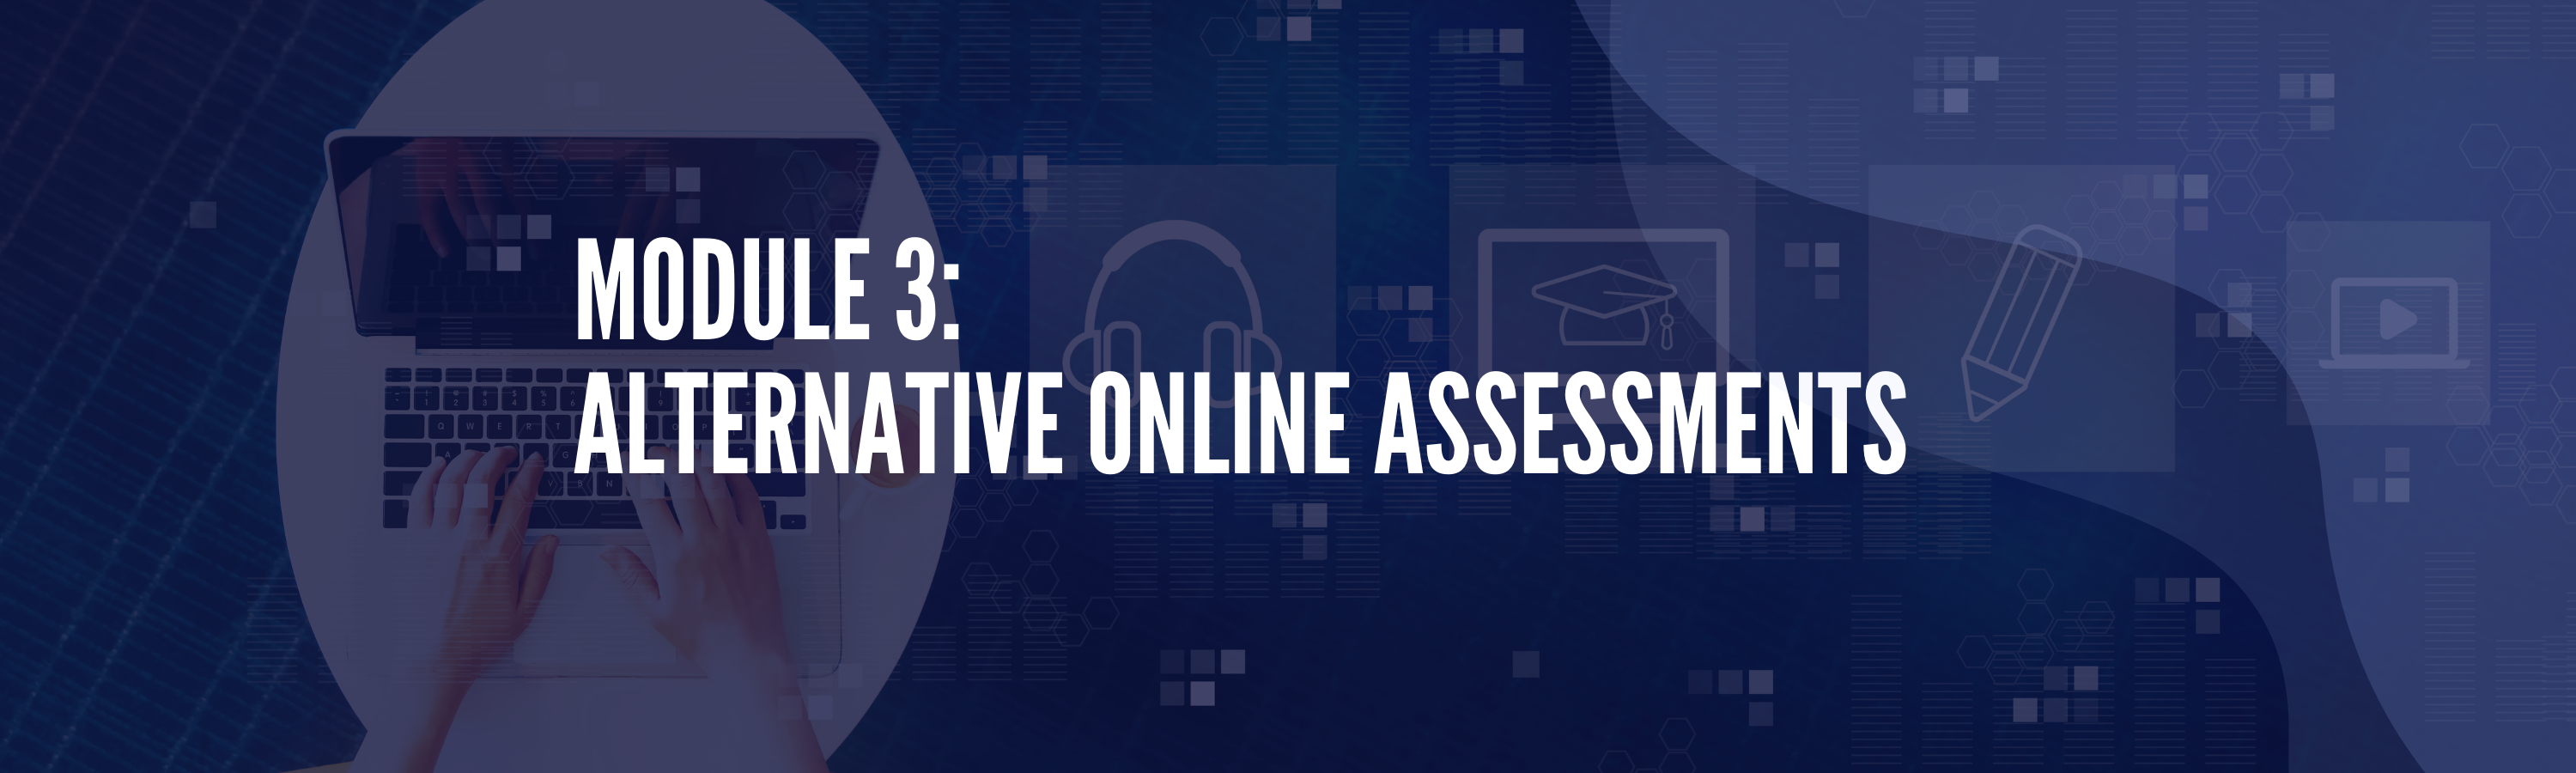 Module 3 – Alternative Online Assessments banner